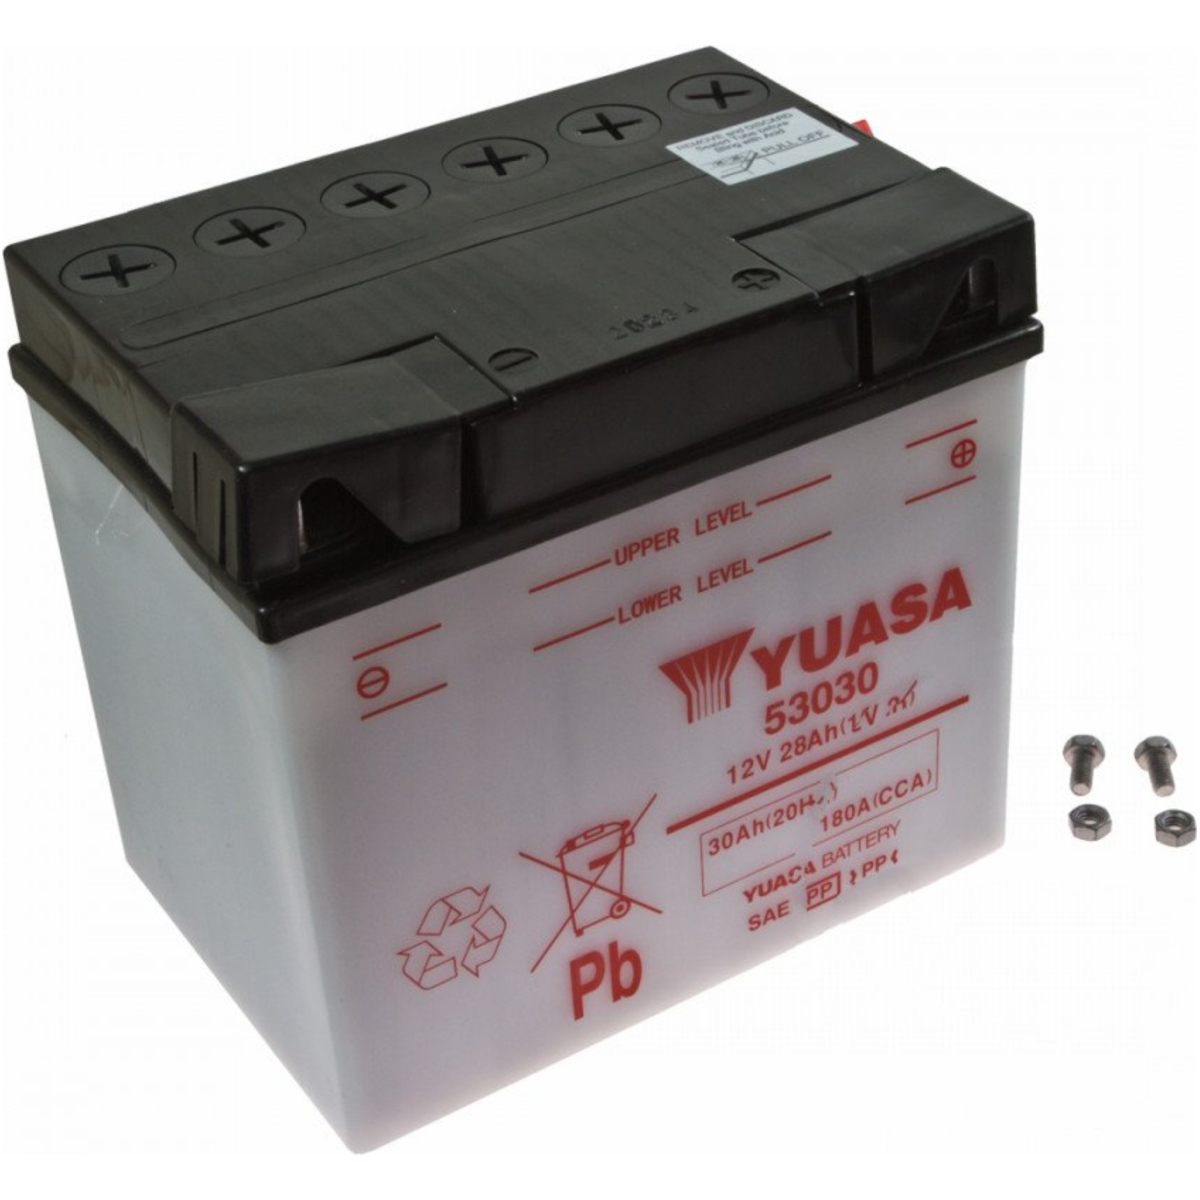 Yuasa 53030(dc) motorradbatterie 53030 dry von Yuasa